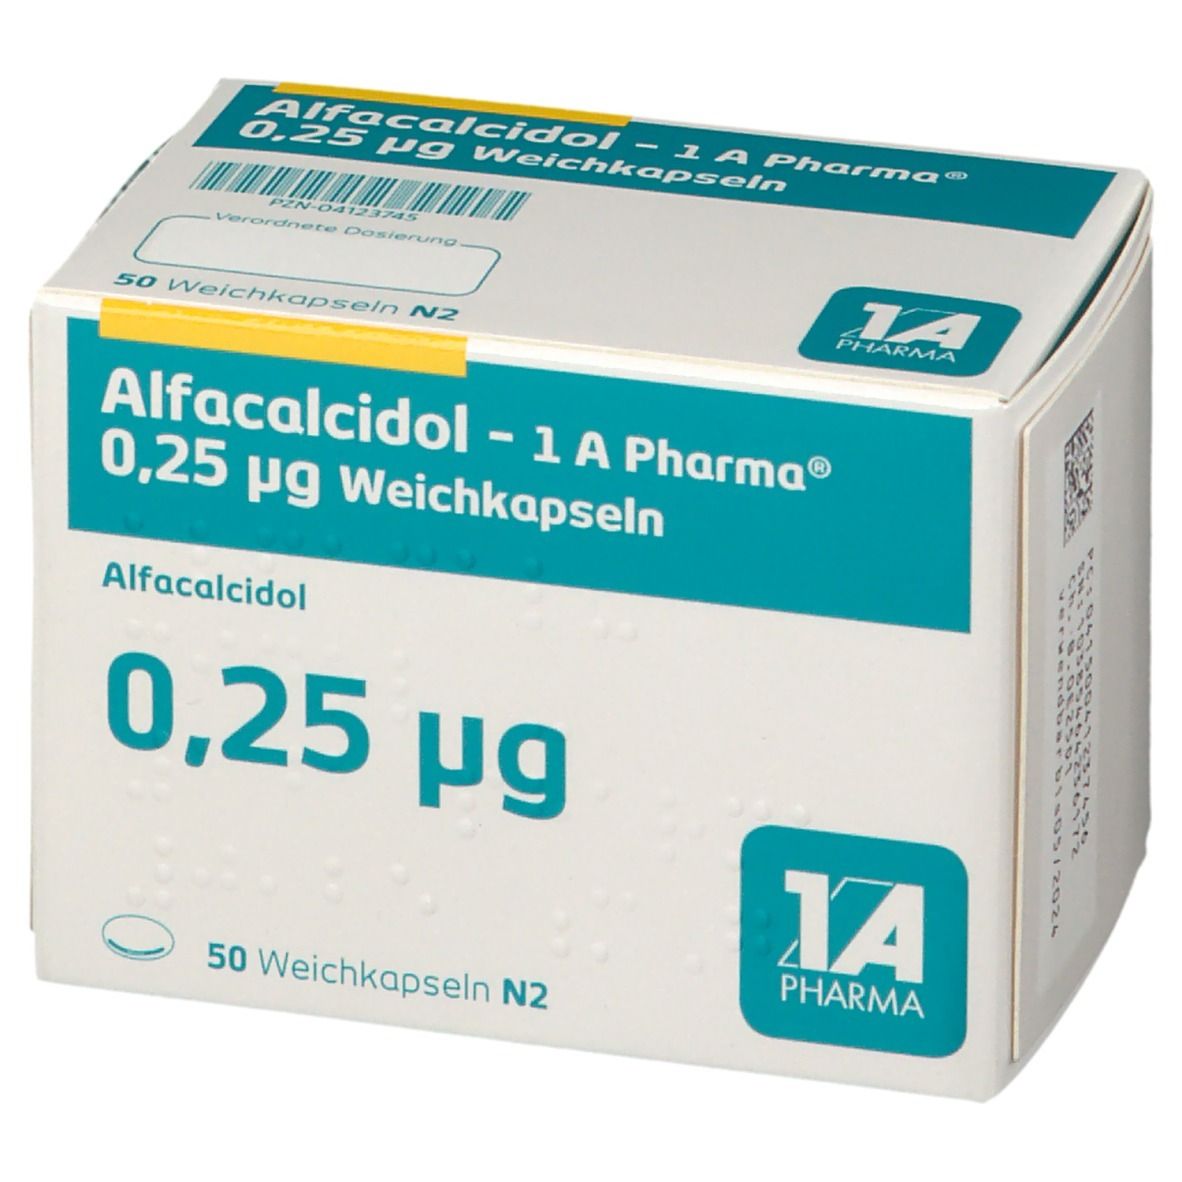 Alfacalcidol - 1 A Pharma® 0,25 µg